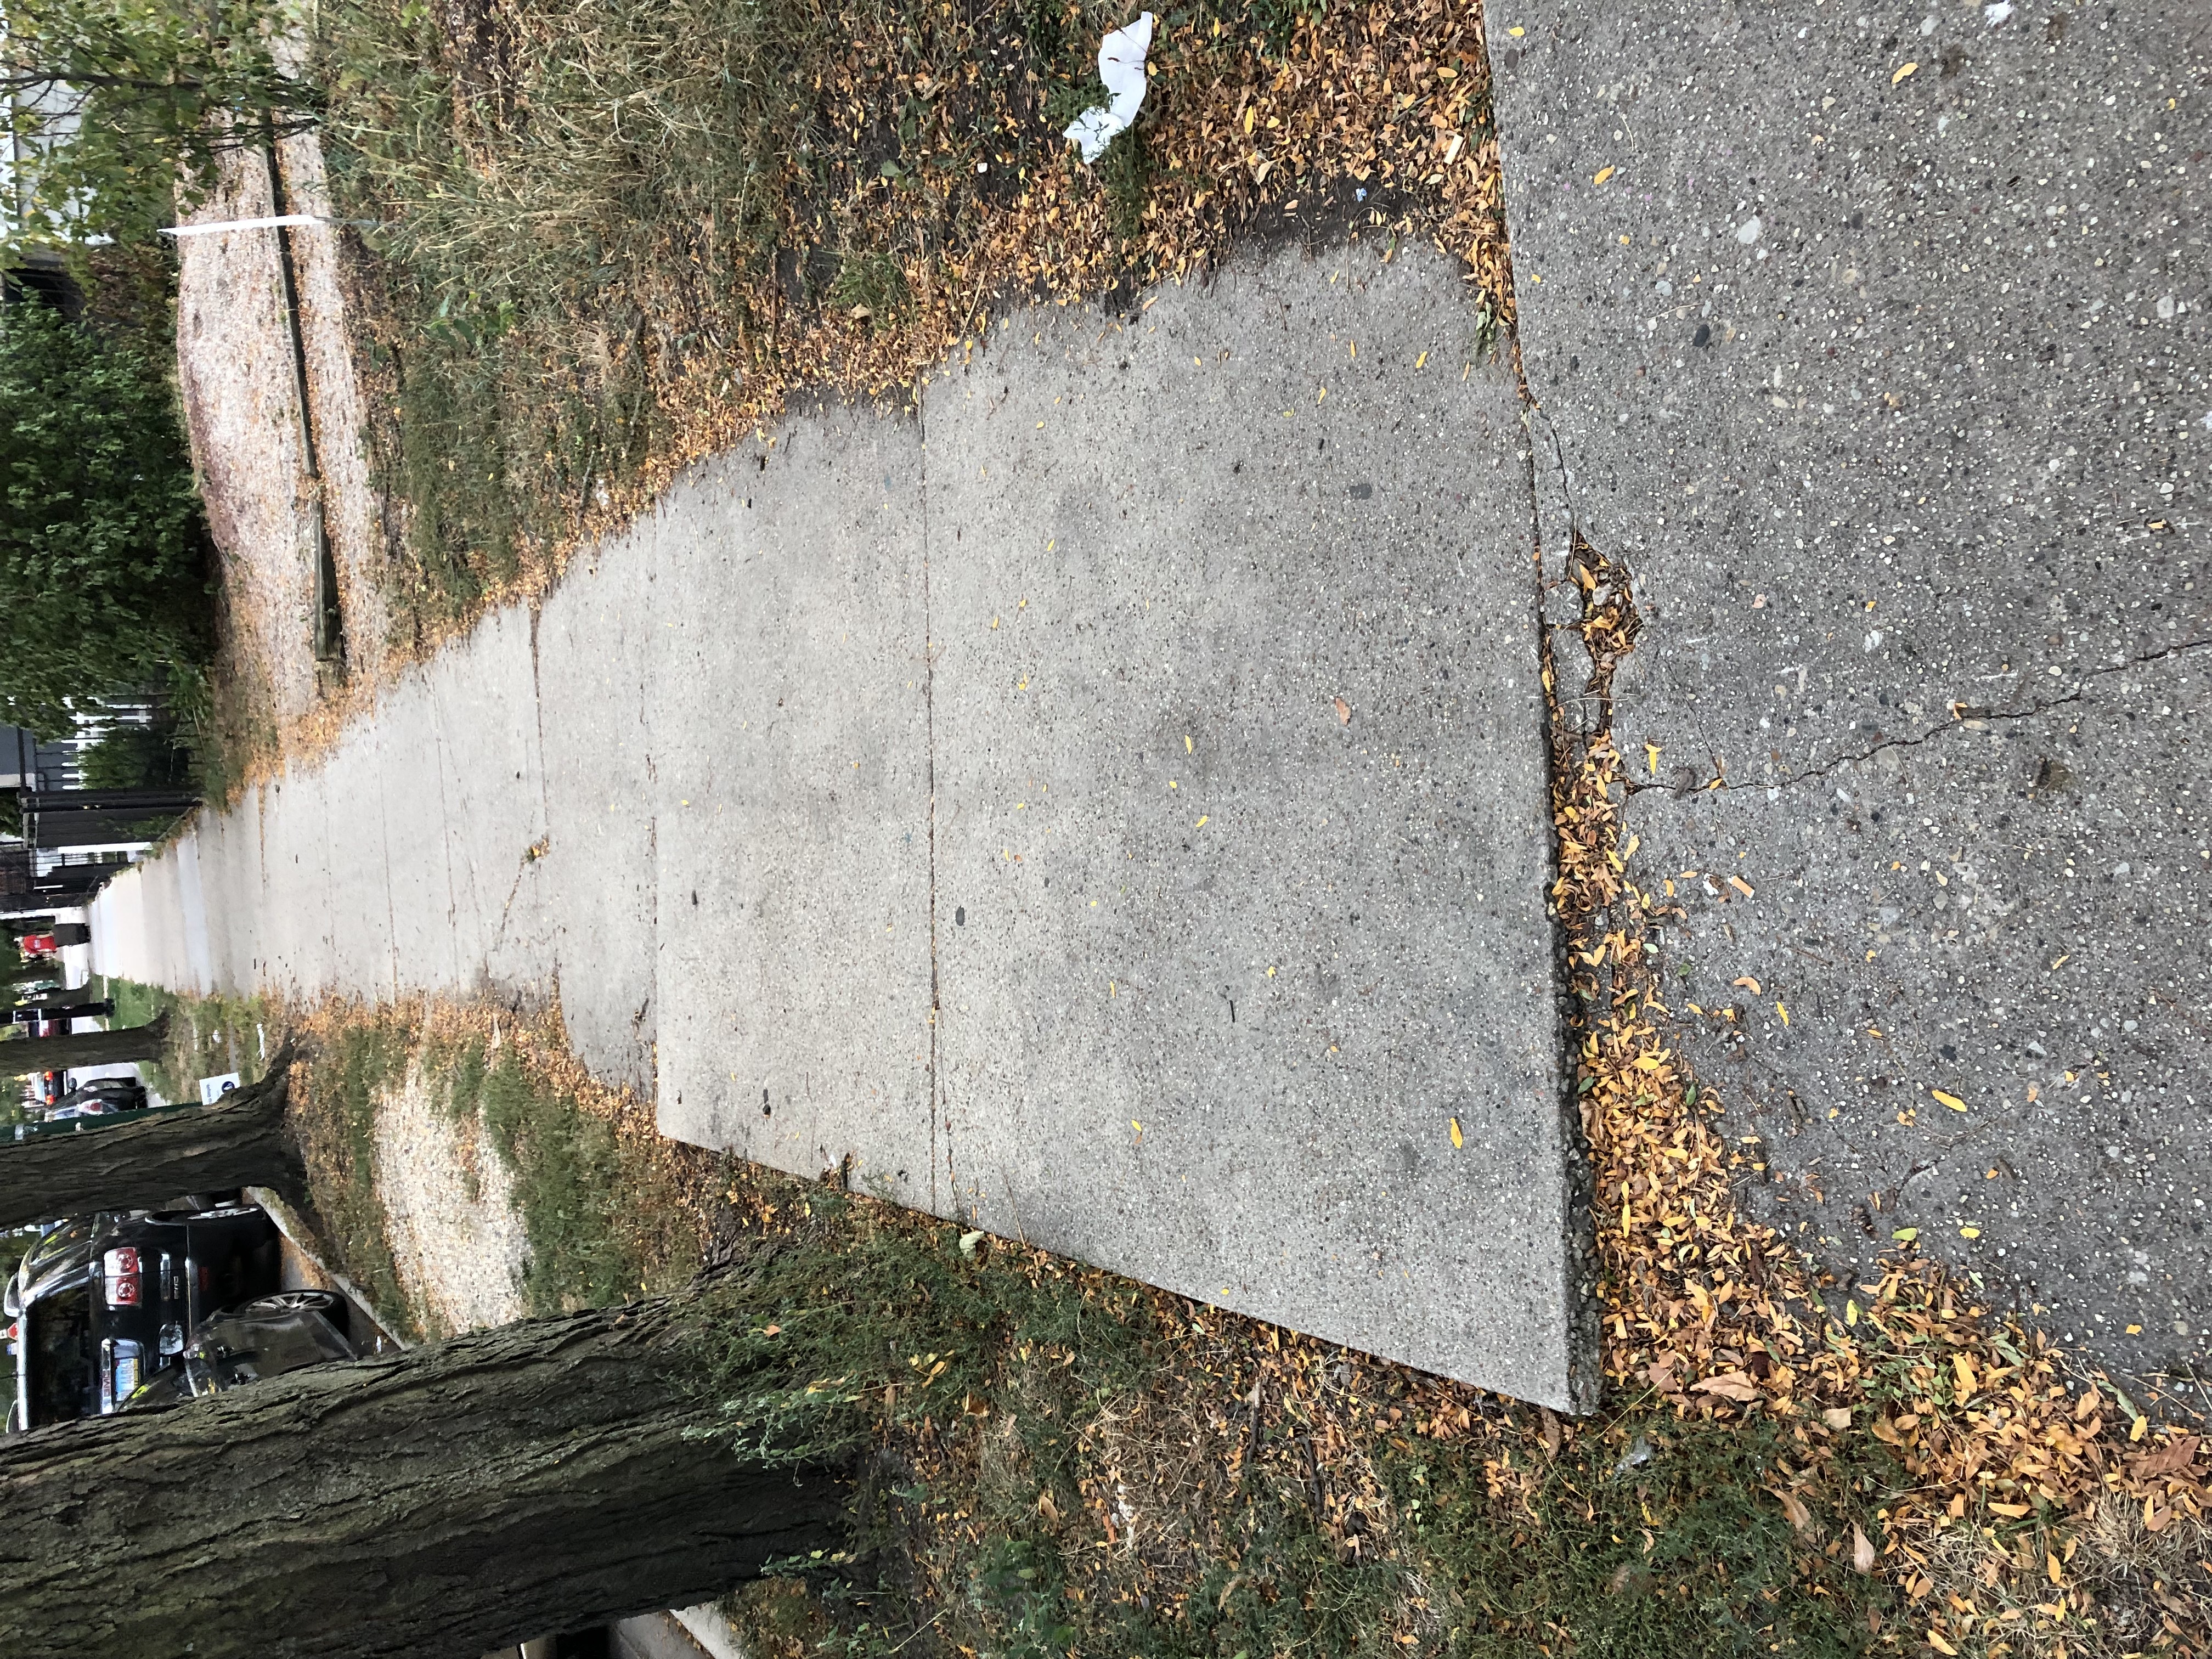 Sidewalk Replacement Program 